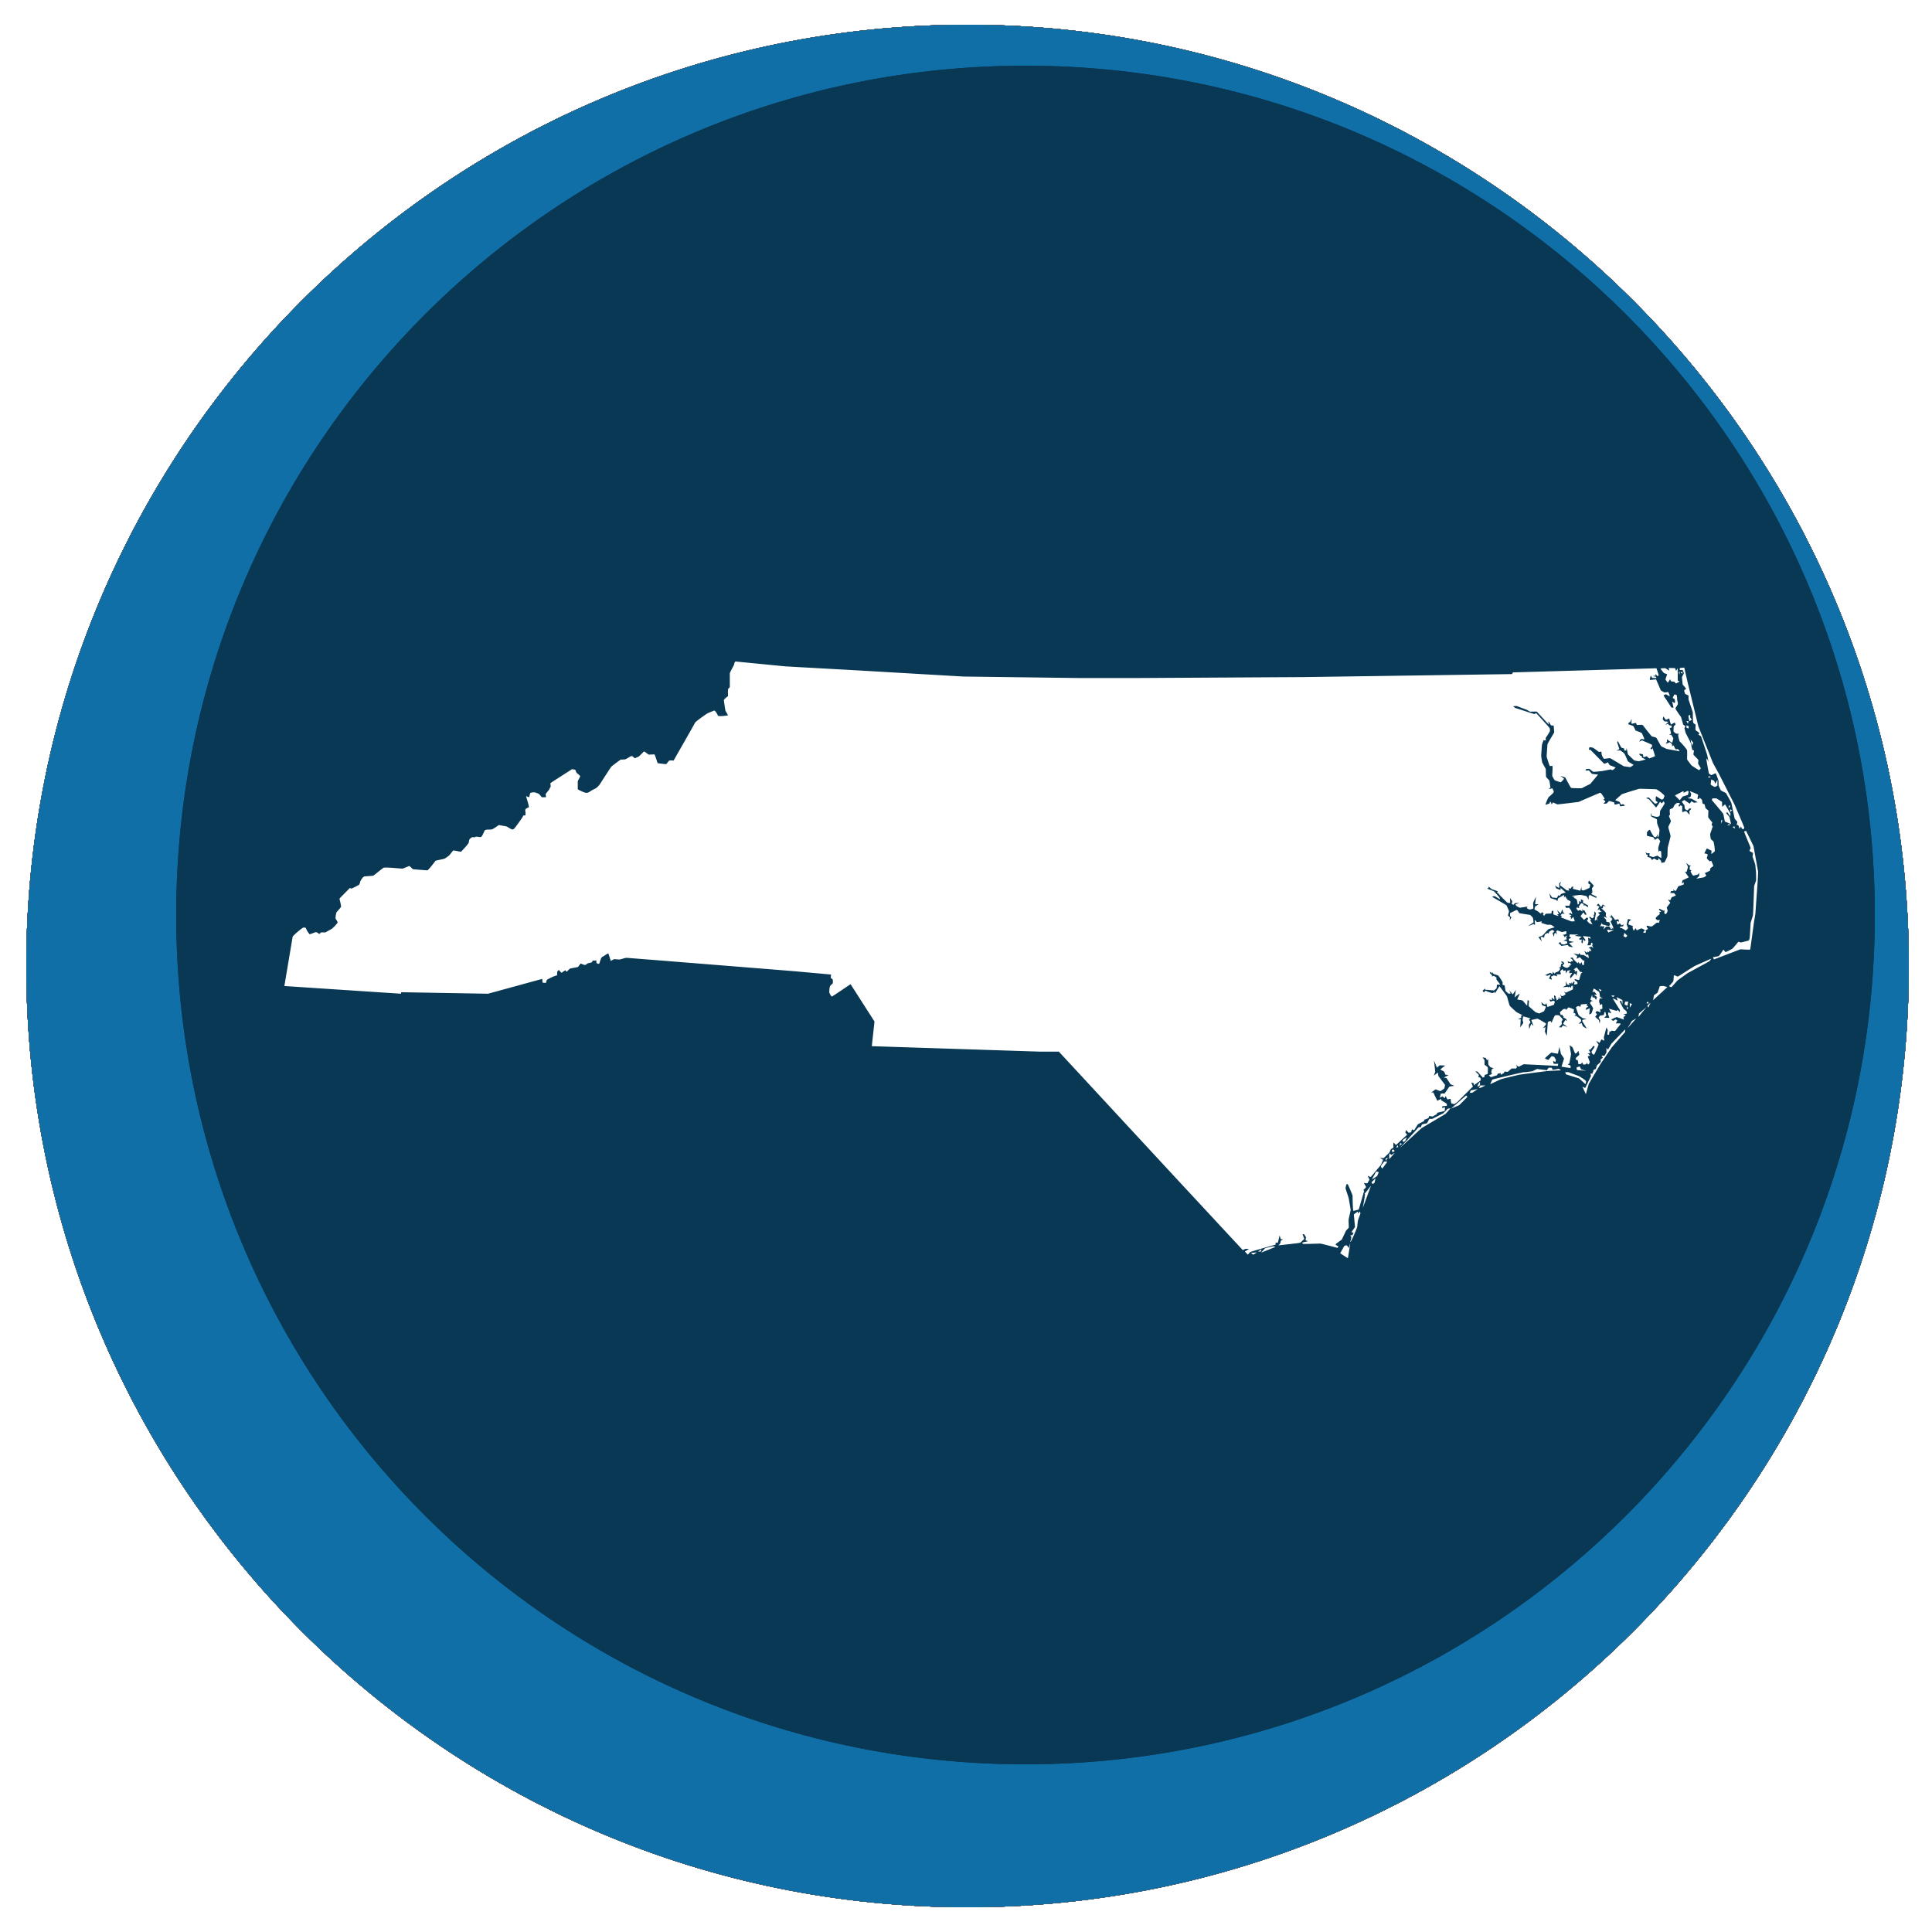 North Carolina state shape in a circle